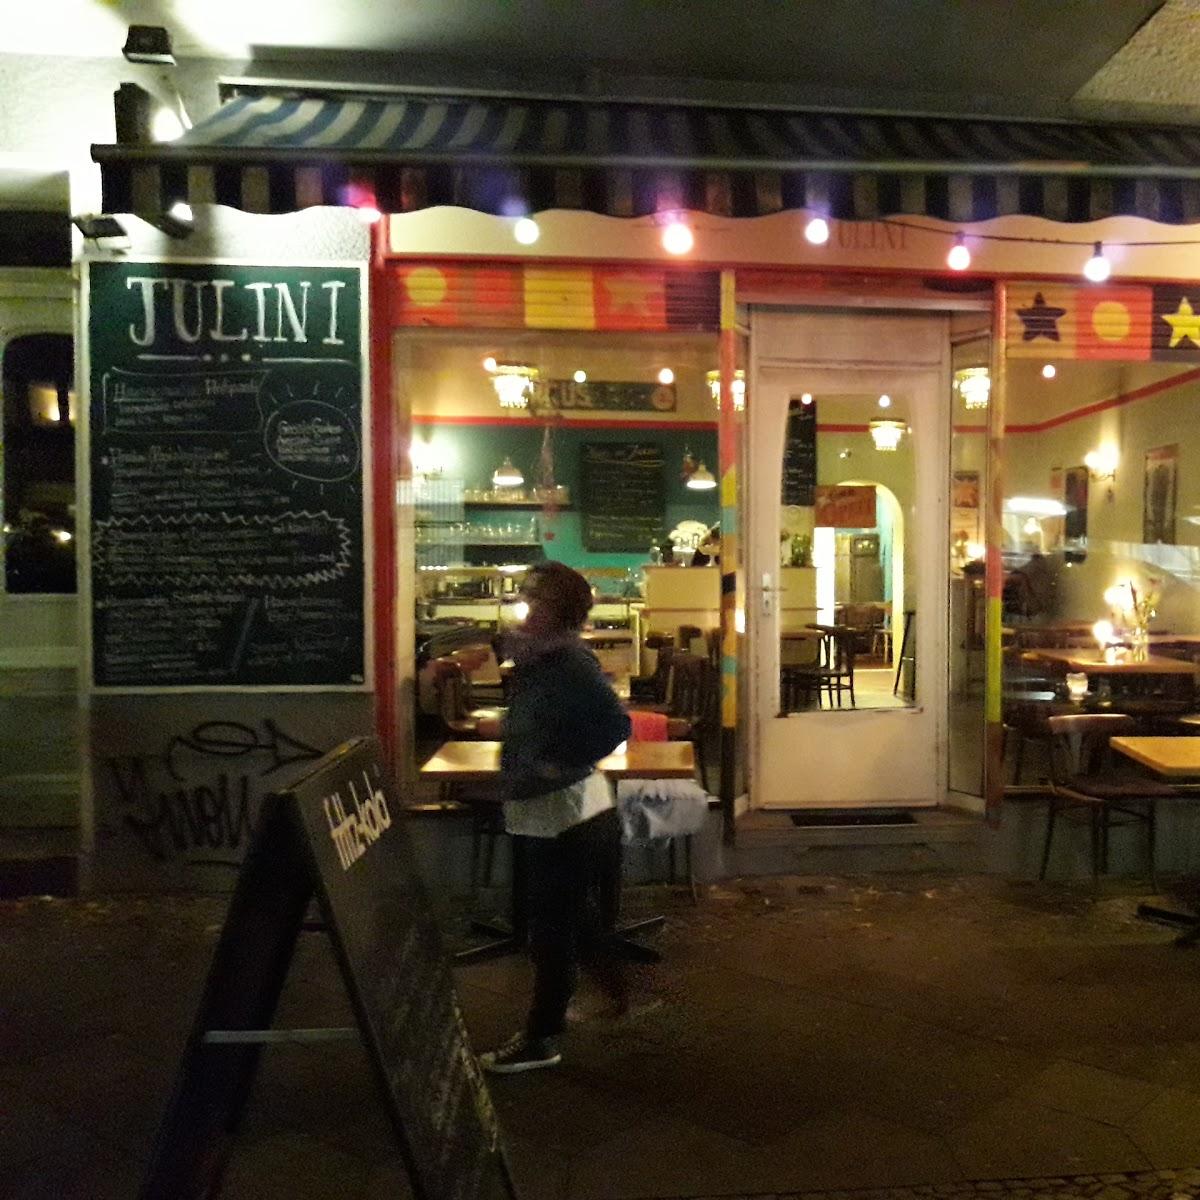 Restaurant "Julini" in Berlin